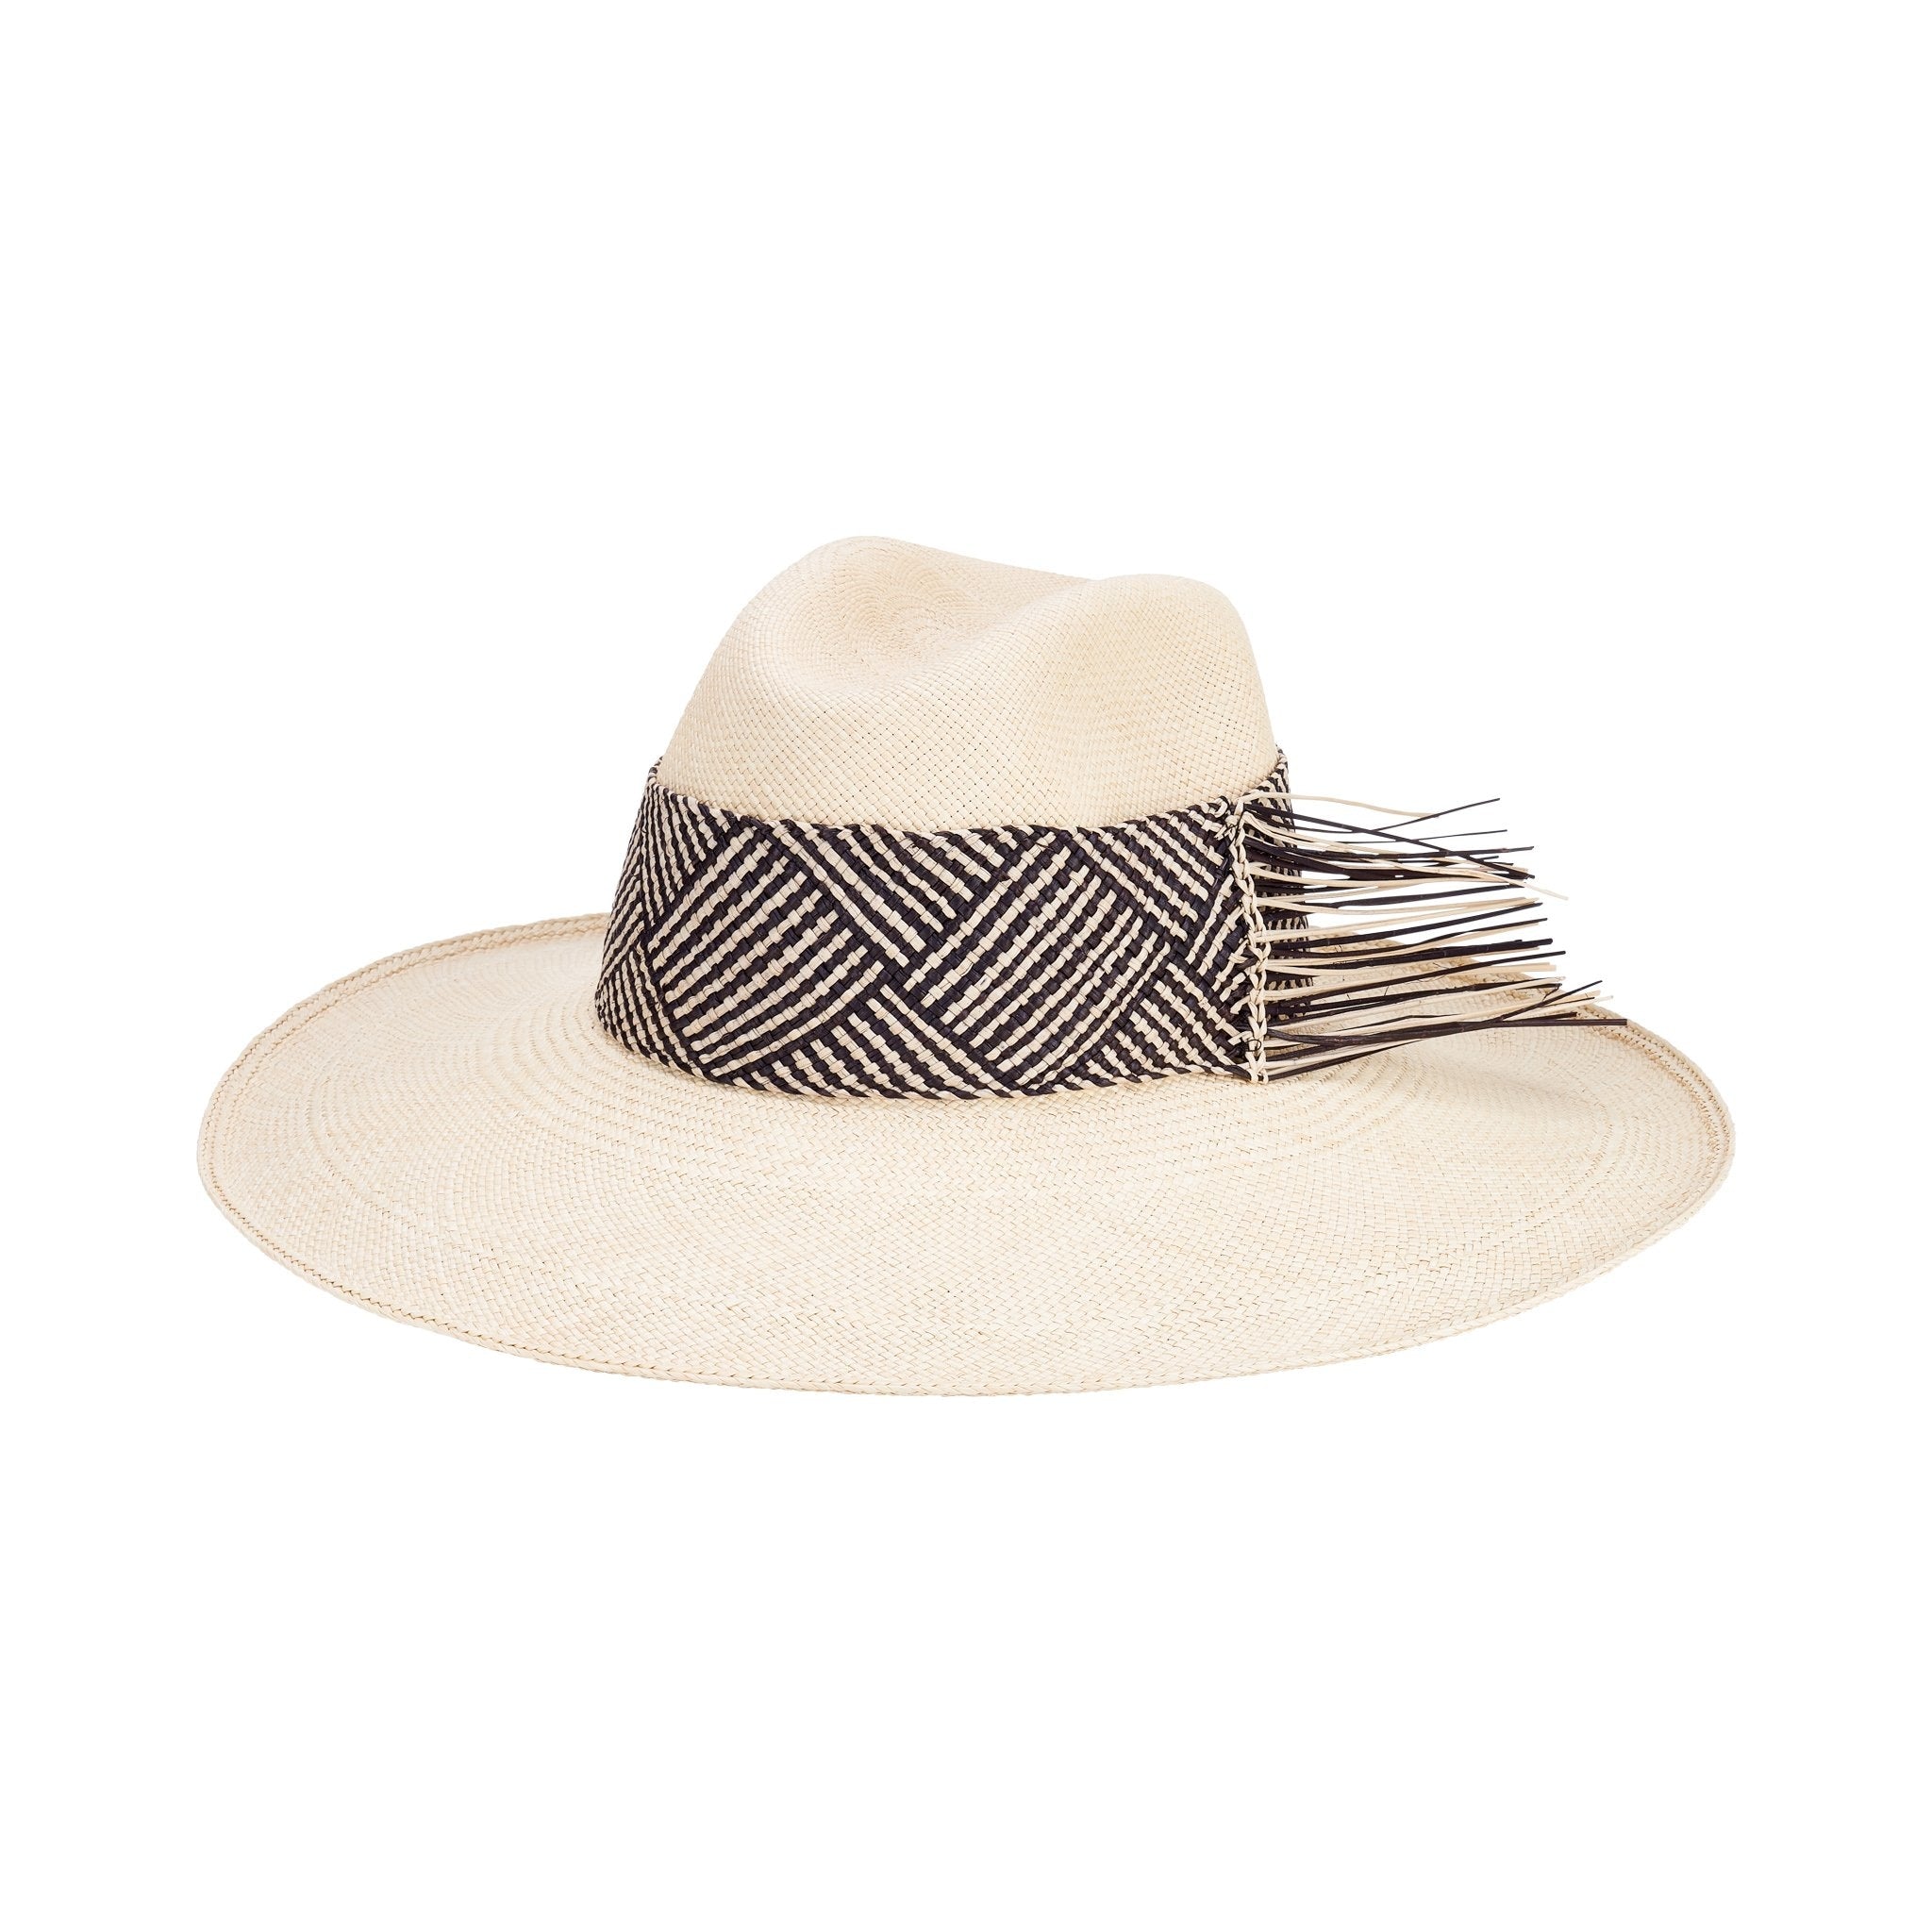 Tucan - Wide Brim SALE Hat artesano